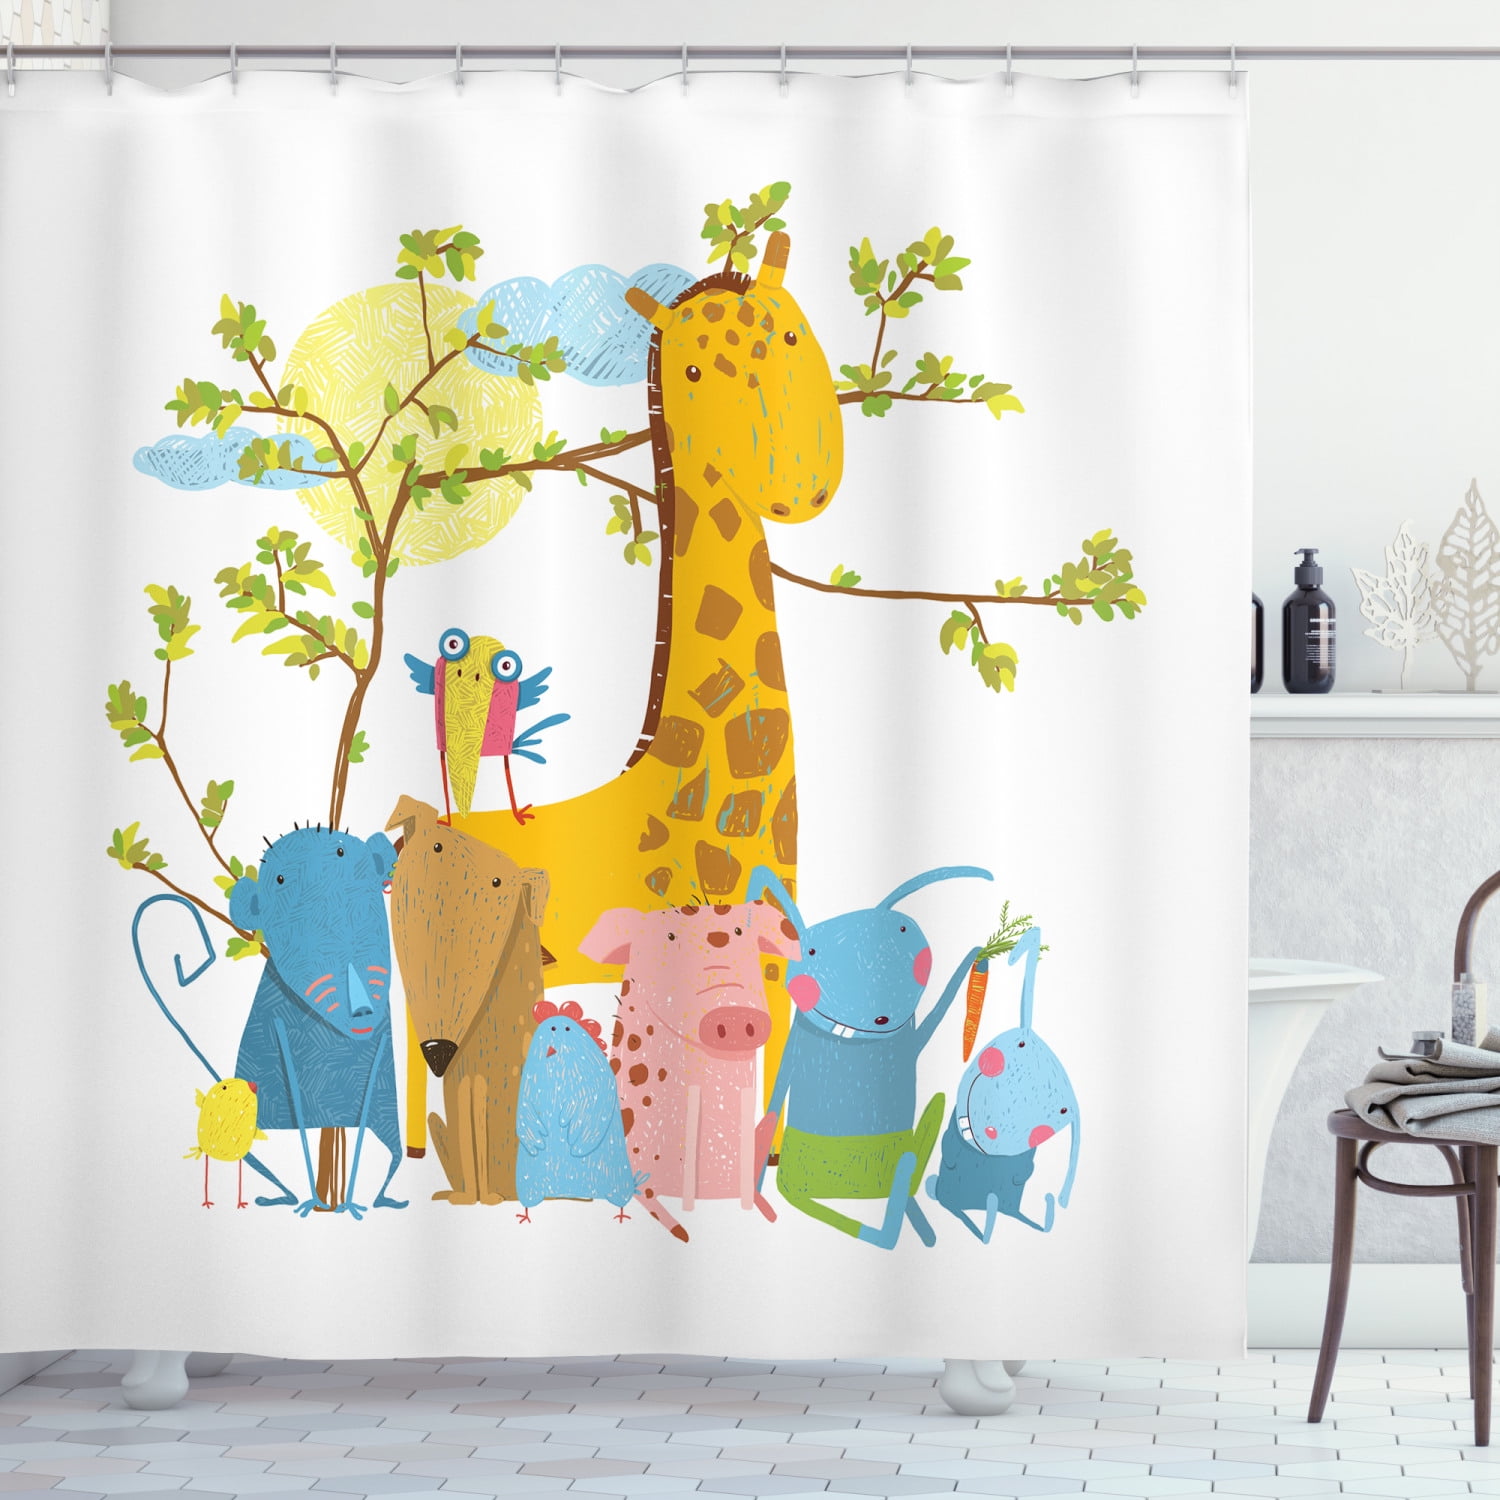 Magic Shower Curtain Kids Theme, Magic Kingdom Shower Curtain